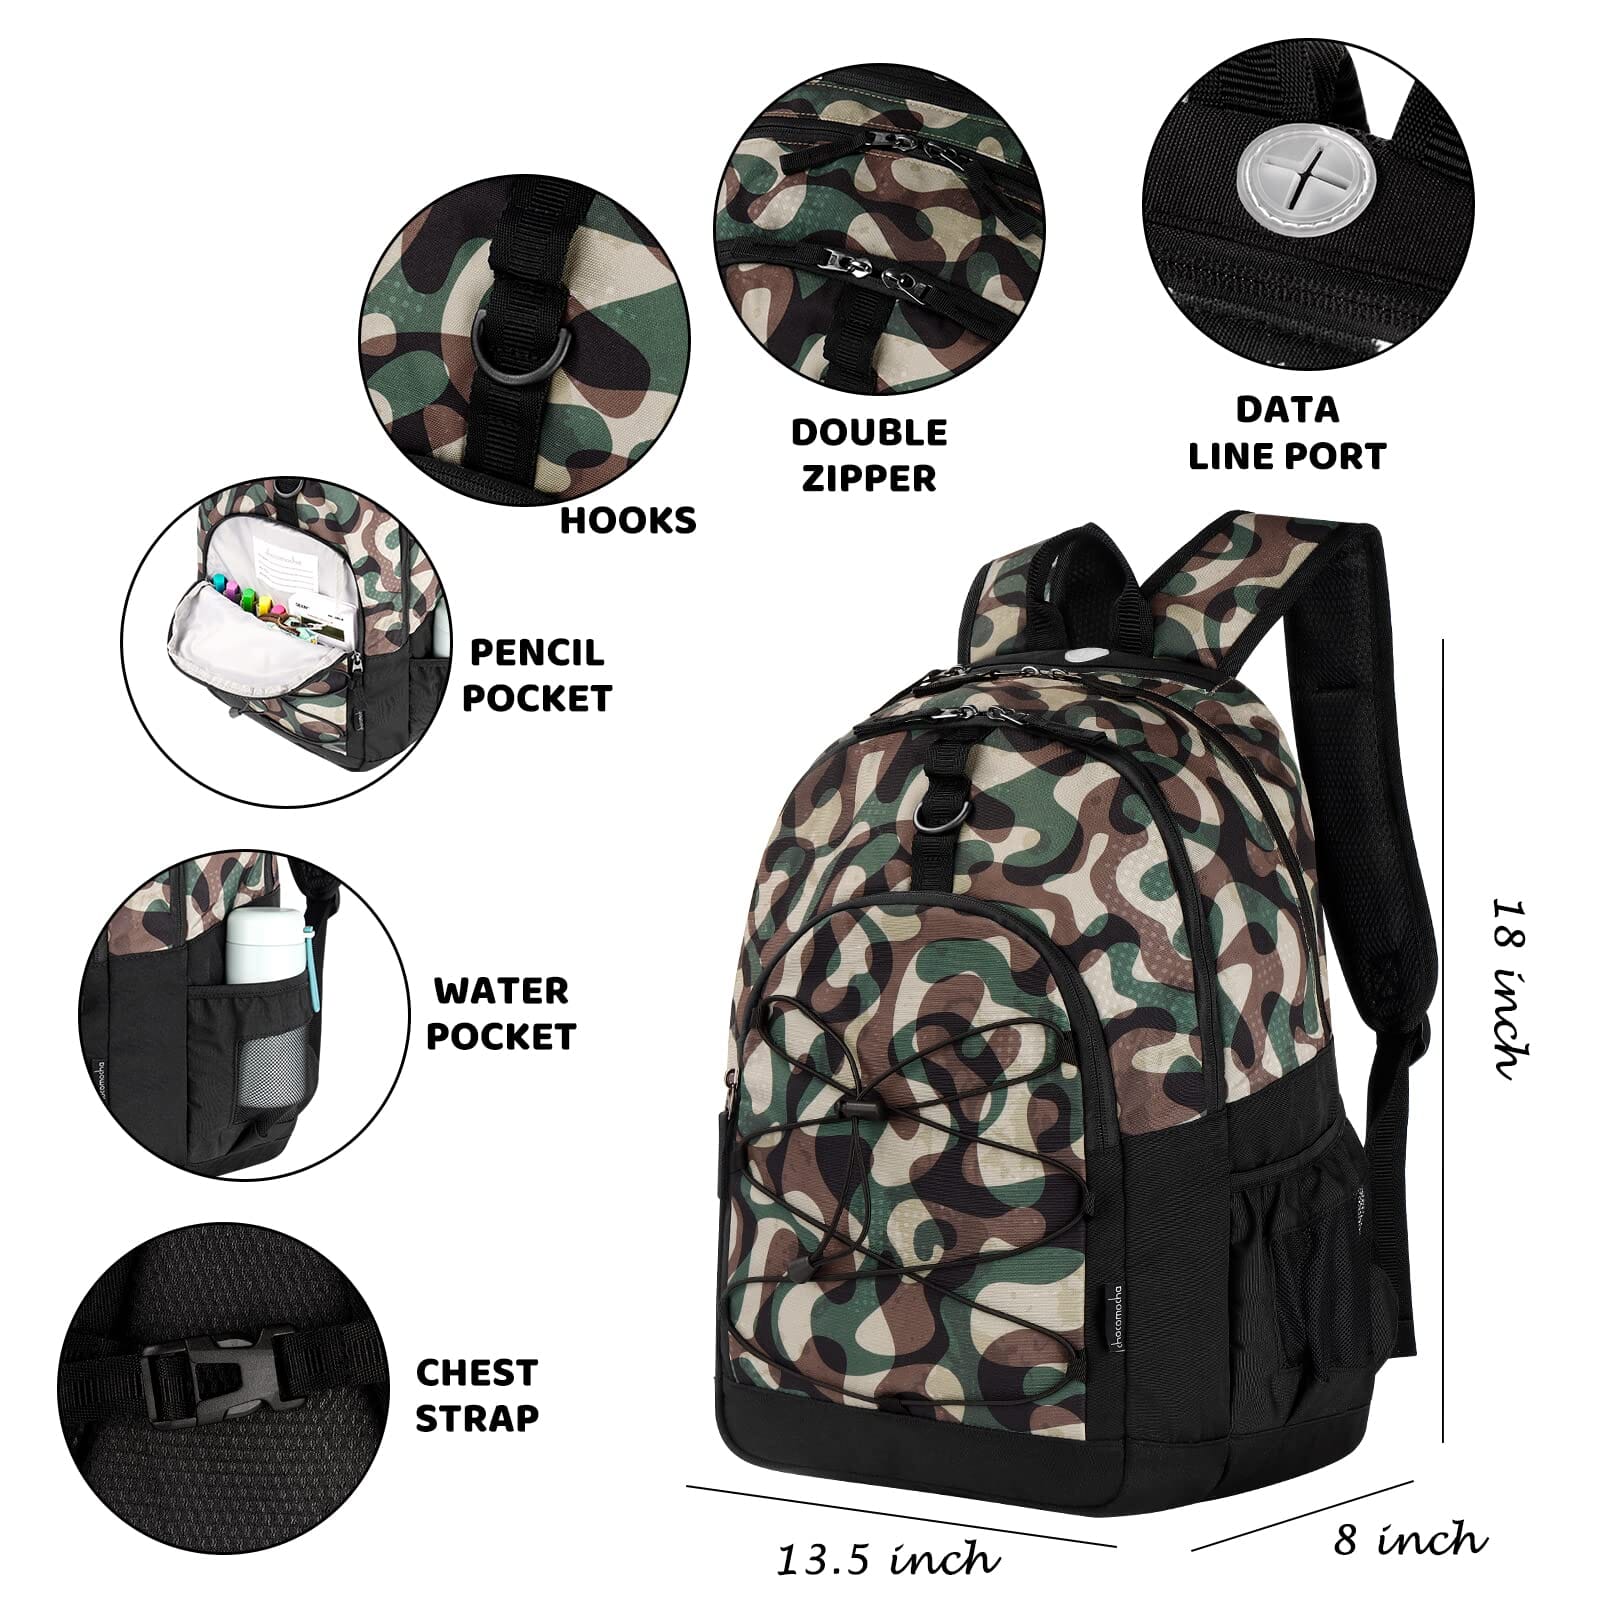 Choco Mocha Black Backpack for Teen Girls, Travel School Backpack for Girls Middle School Large Bookbag 18 Inch, Camo chocomochakids 